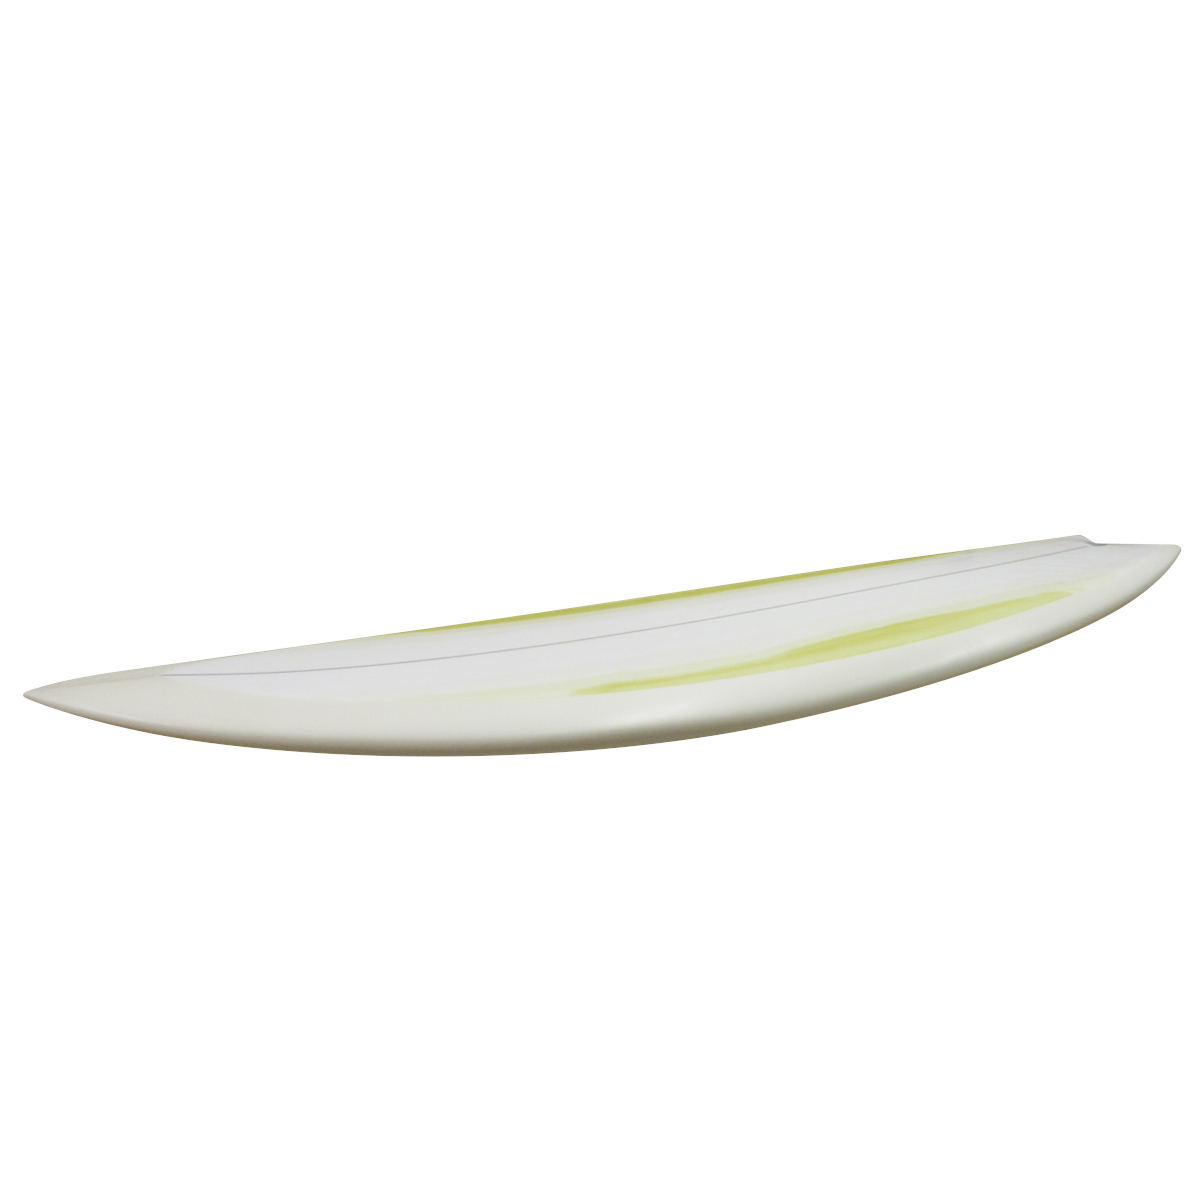 Mccallum Surfboards / Proto Fish 6'5 Shaped By Jeff Mccallum